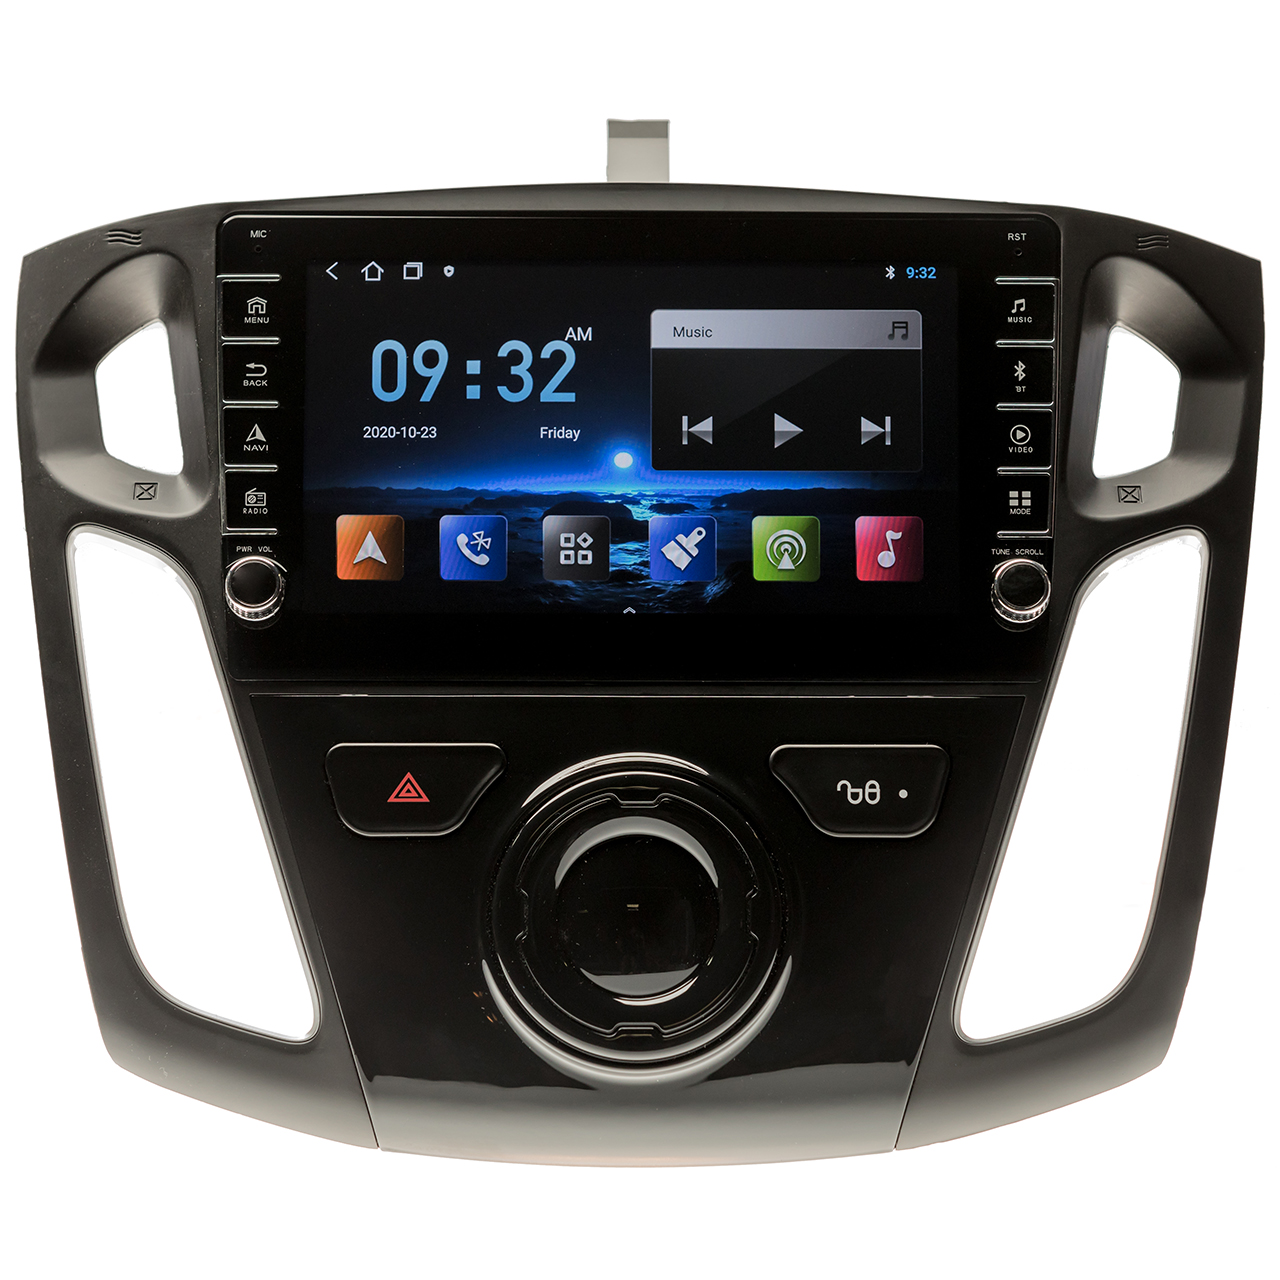 Navigatie AUTONAV ECO Android GPS Dedicata Ford Focus 3 2011-2018, Model PRO 16GB Stocare, 1GB DDR3 RAM, Display 8